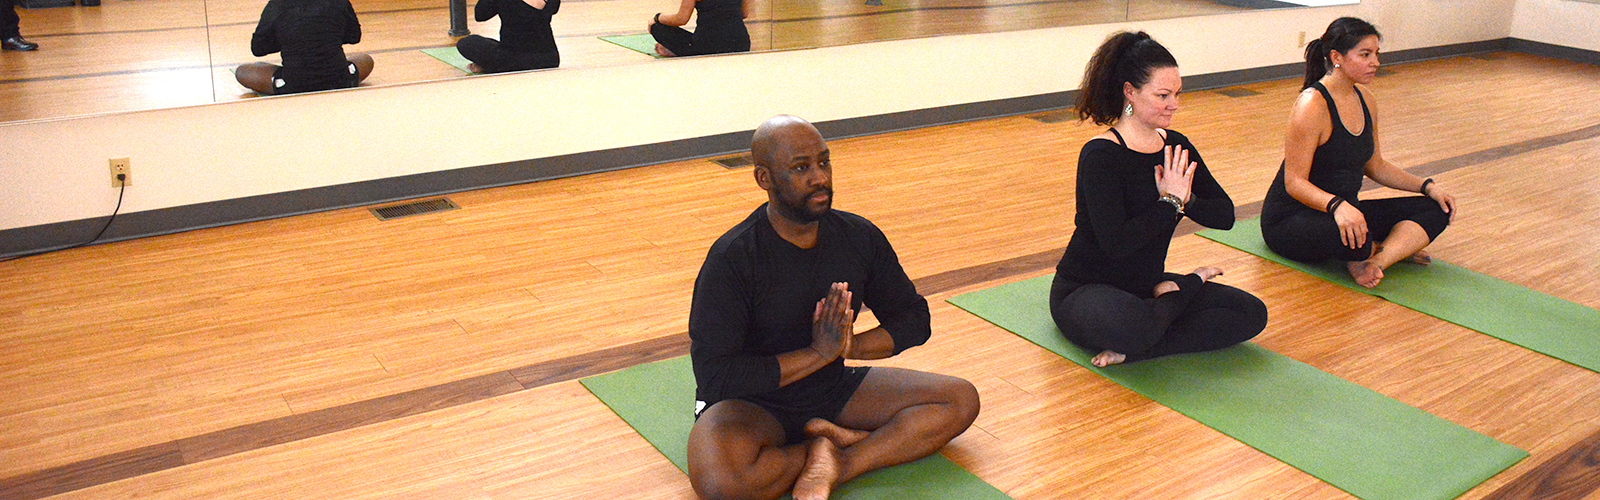 Evolation Yoga on Buffalo’s West Side offers a broad range of classes, from vinyassa to bikram.